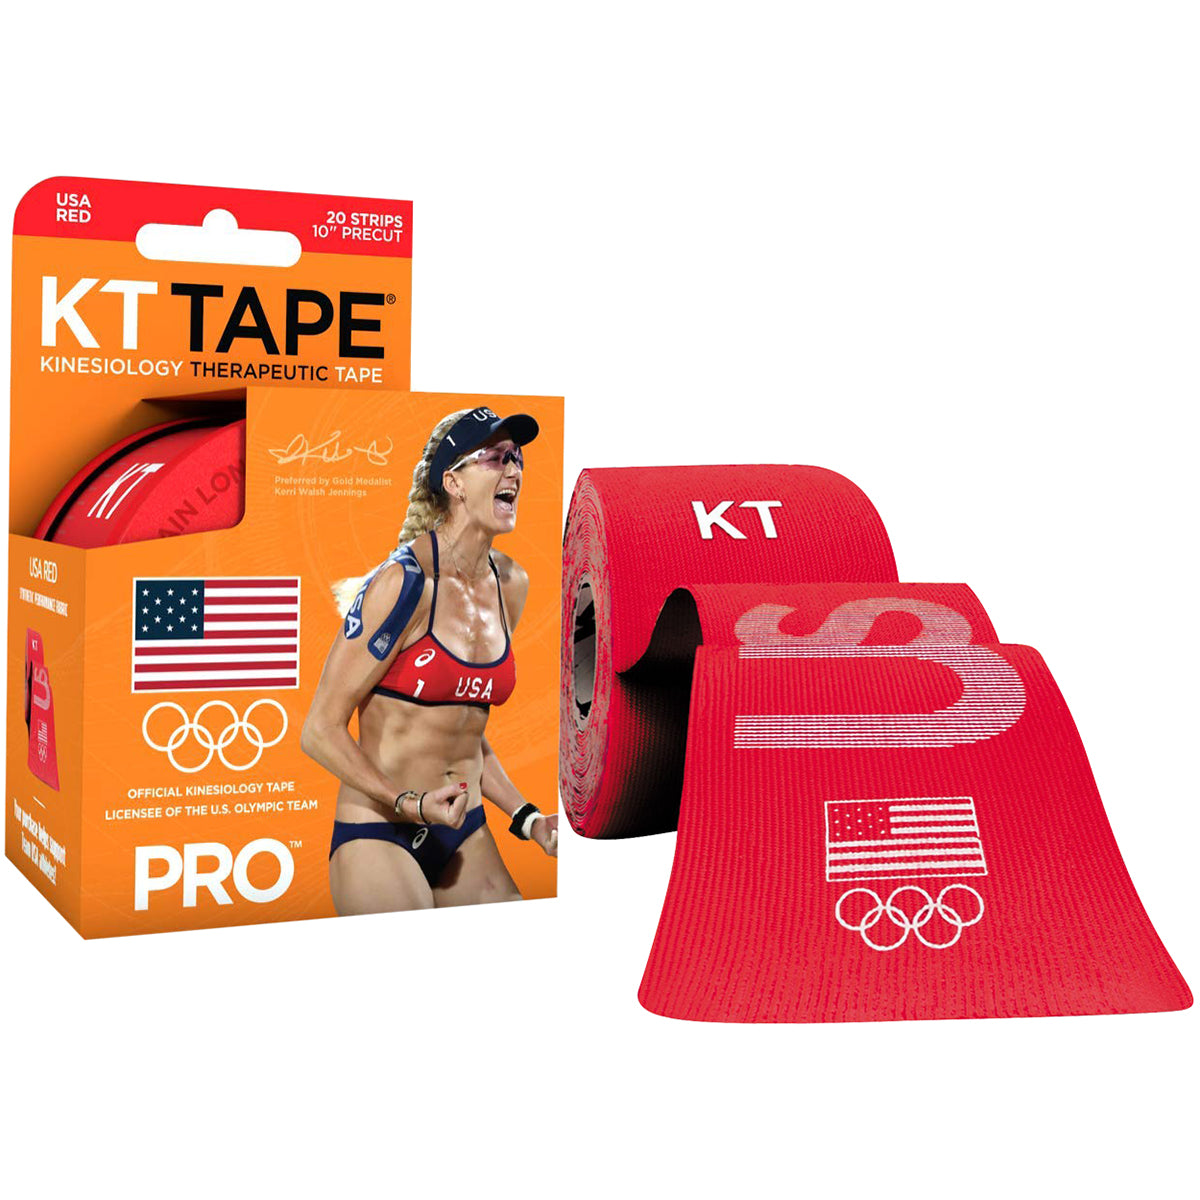 KT Tape Pro Team USA 10" Precut Kinesiology Therapeutic Sports Roll - 20 Strips KT Tape